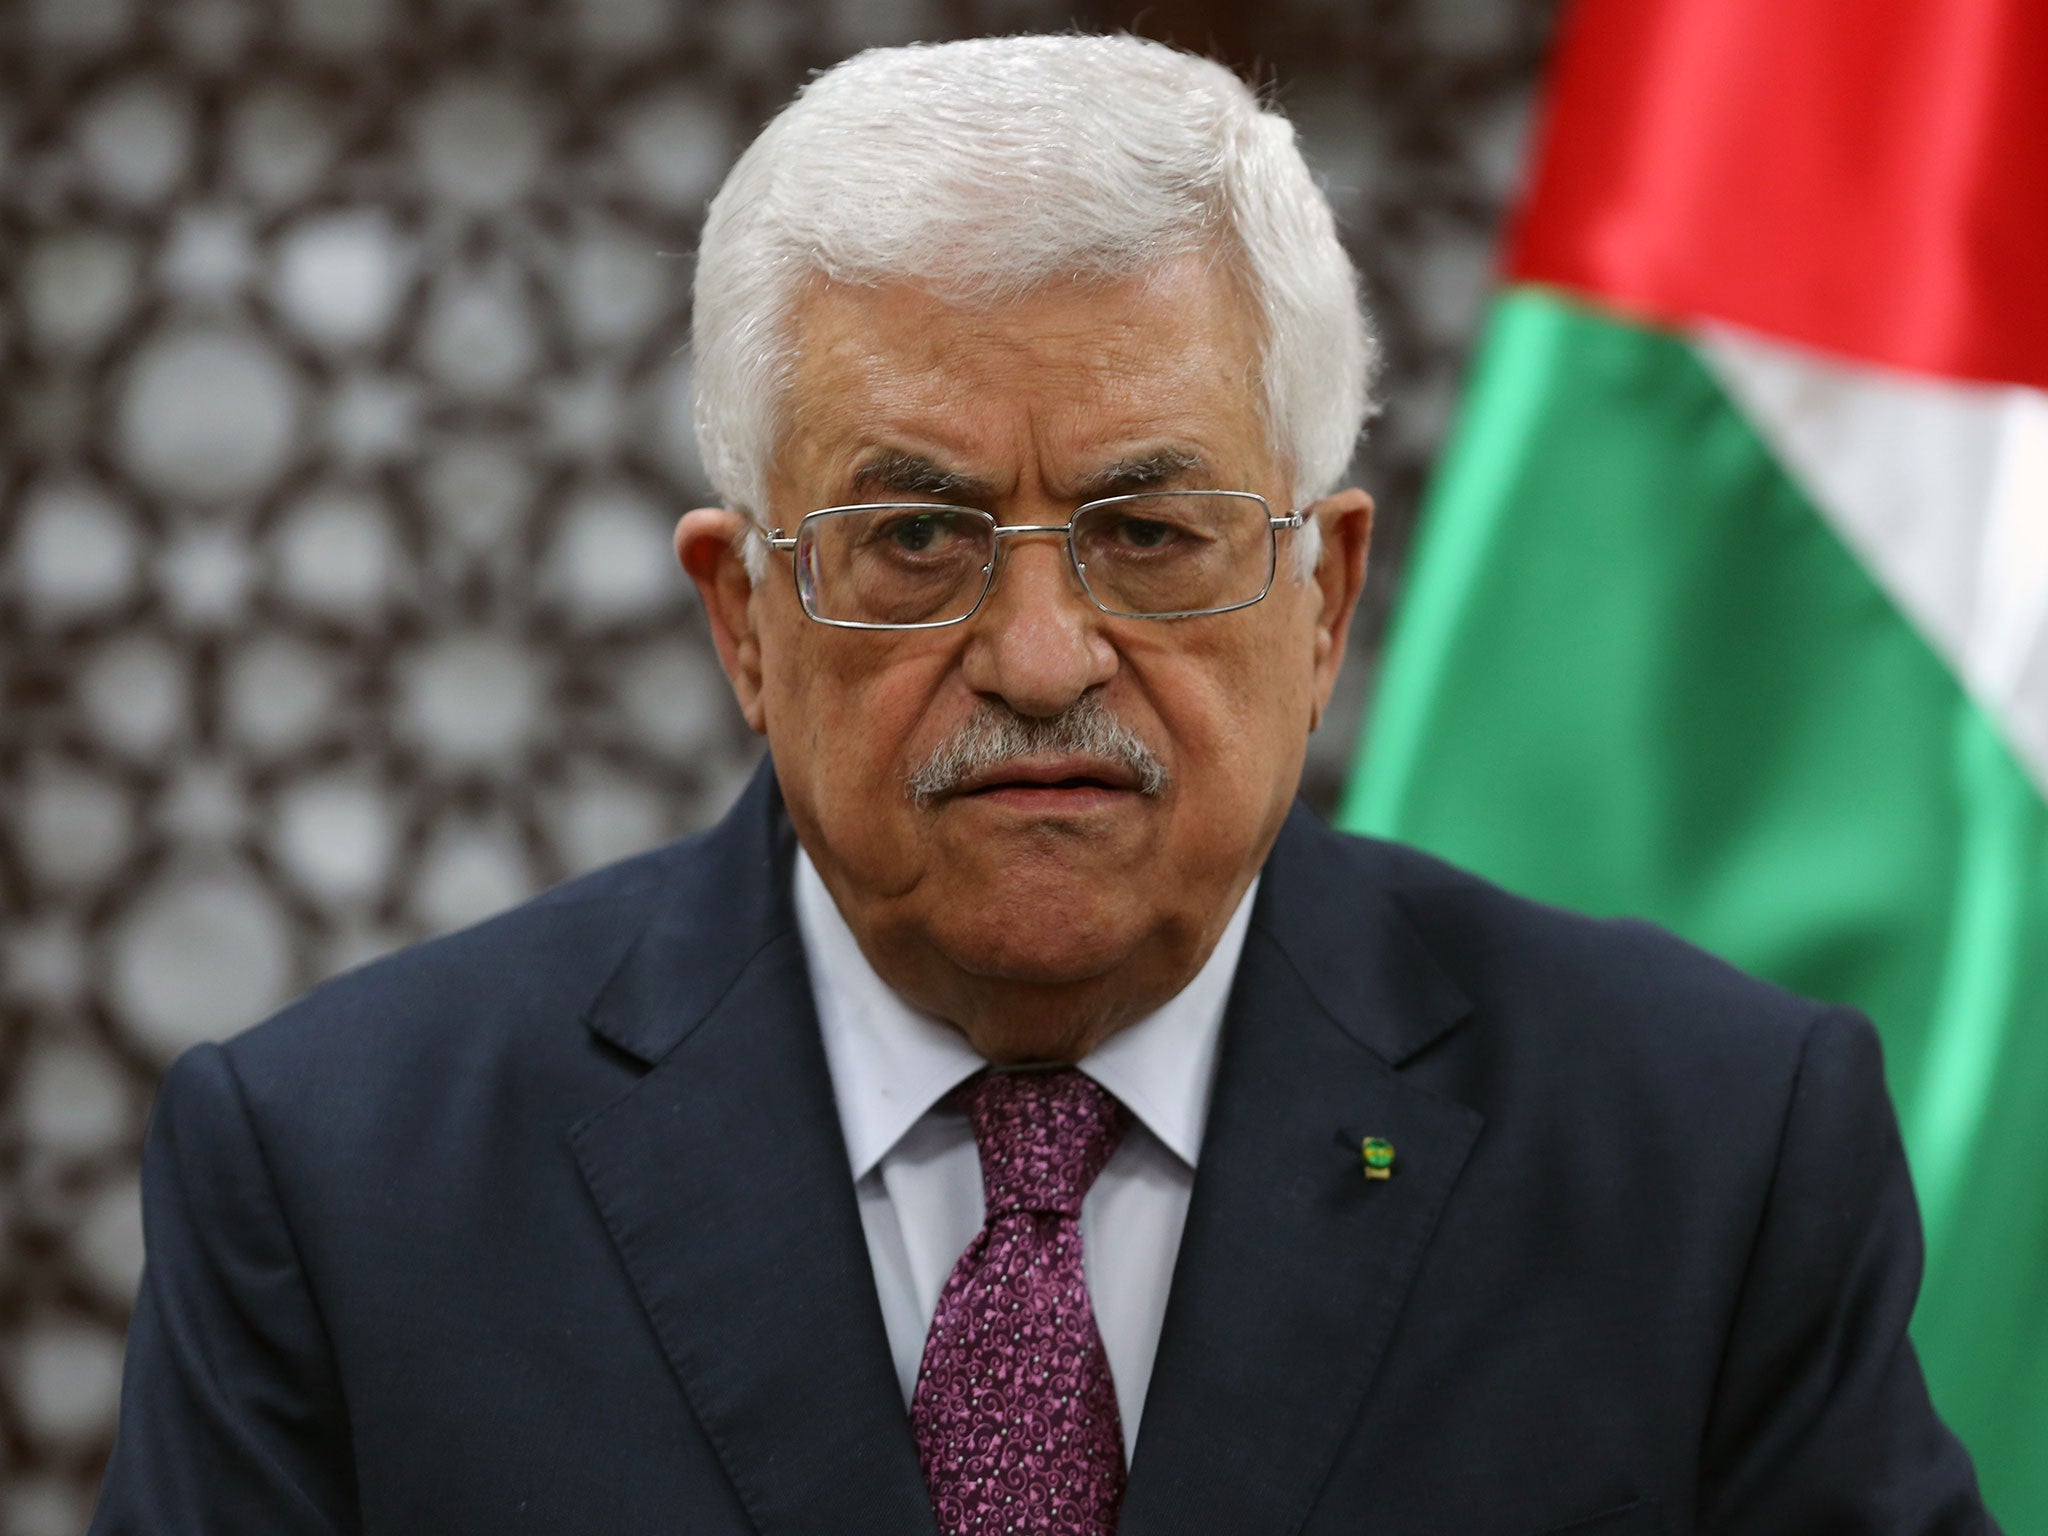 Palestinian President Mahmoud Abbas Warns Donald Trump Not To Move Us Israel Embassy To